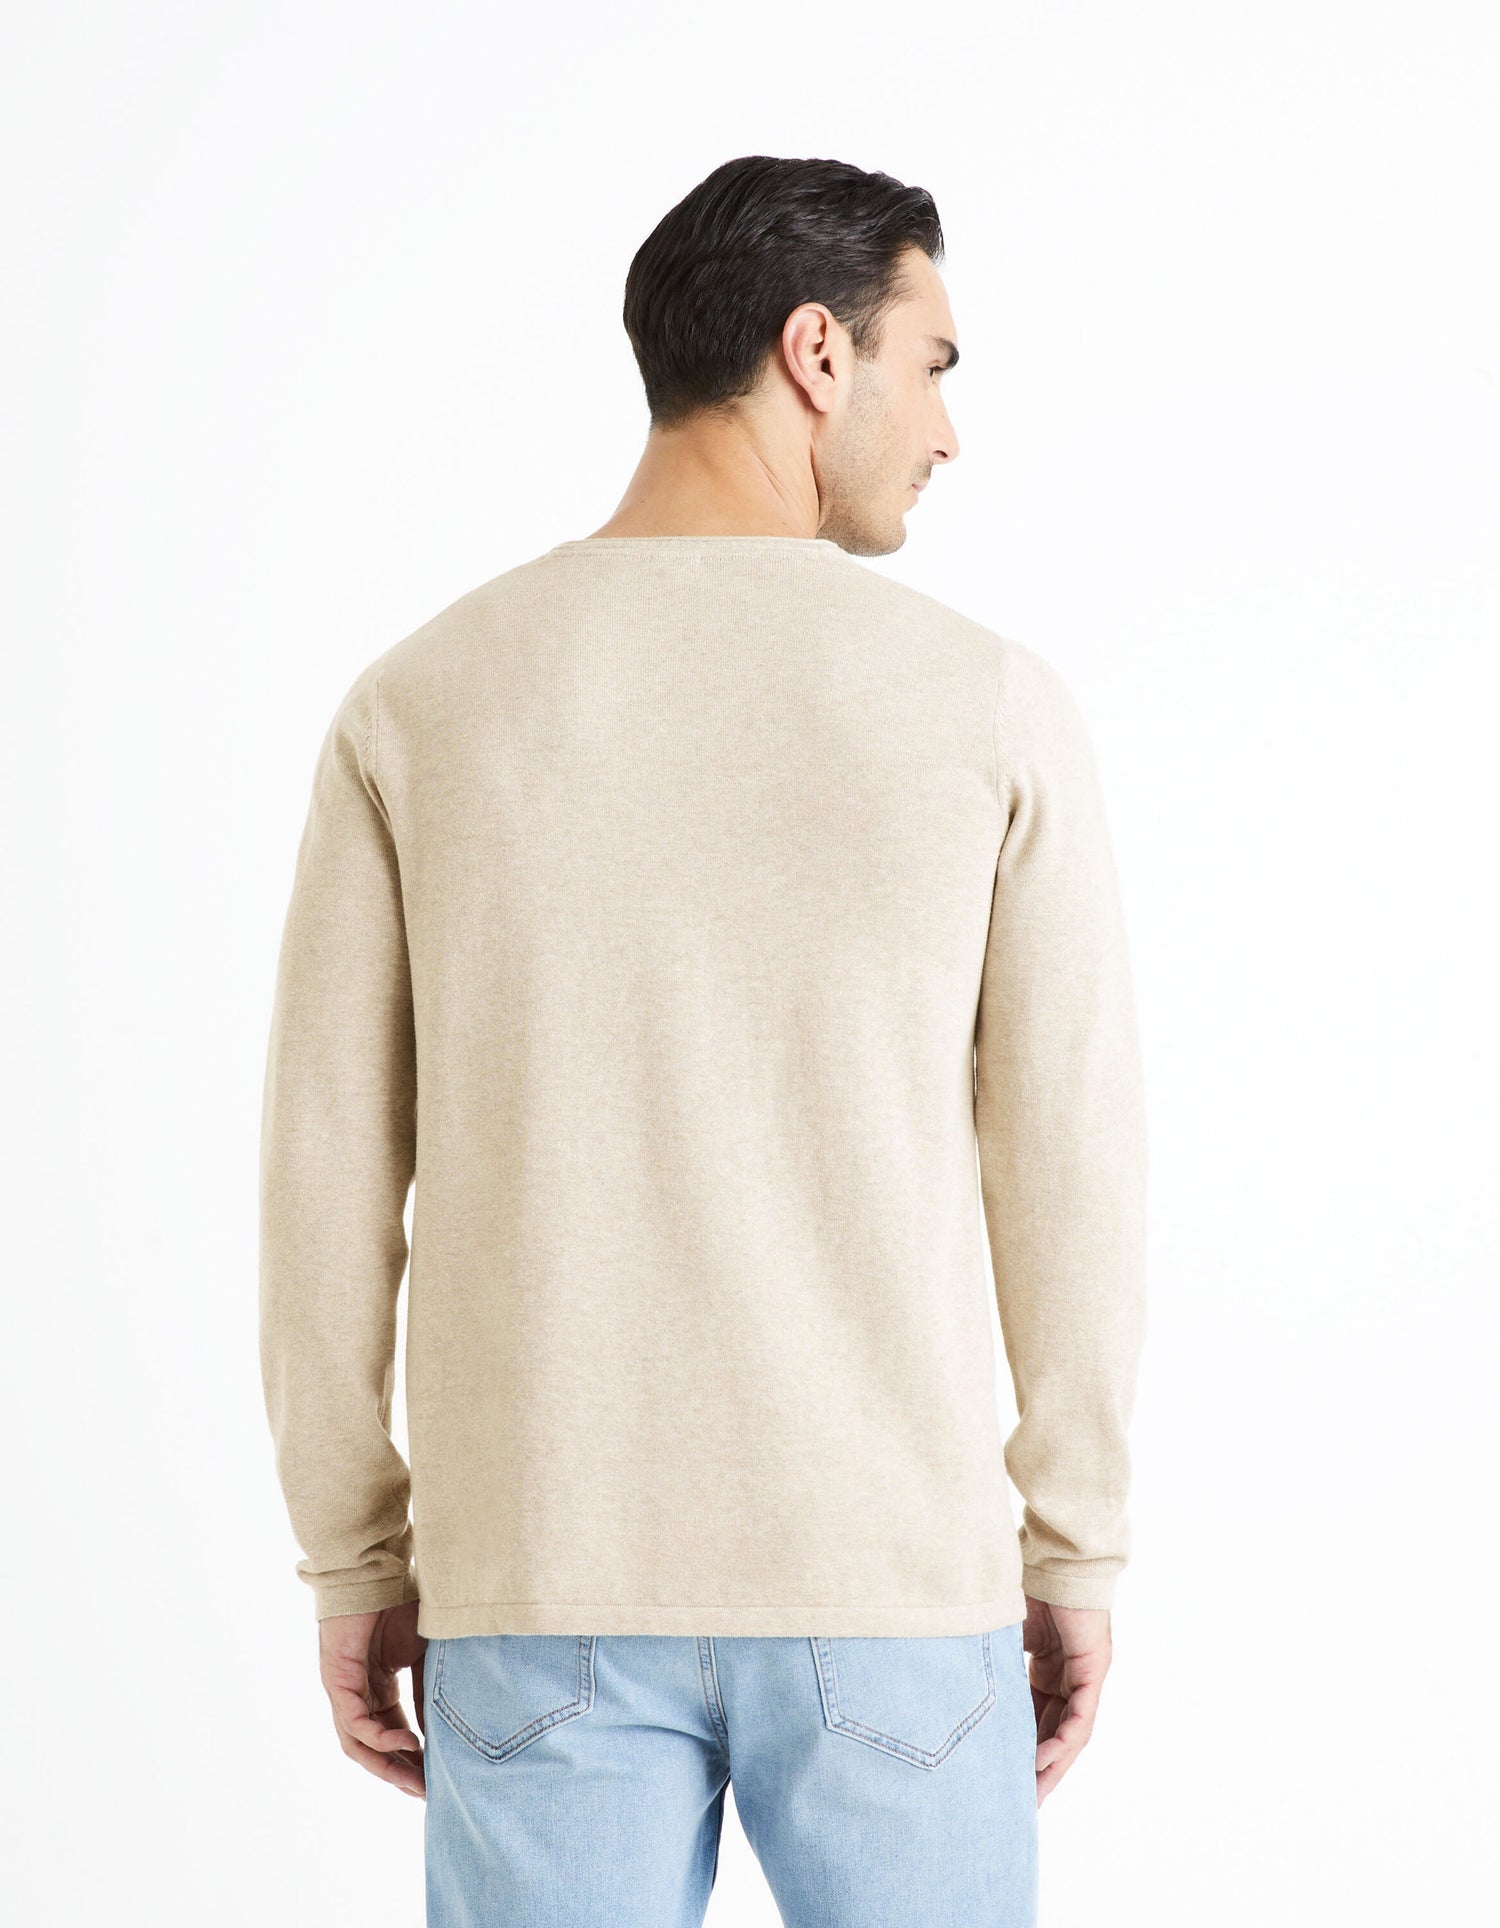 Tunisian Collar Sweater 100% Cotton - Beige_FELANO_BEIGE MEL_04